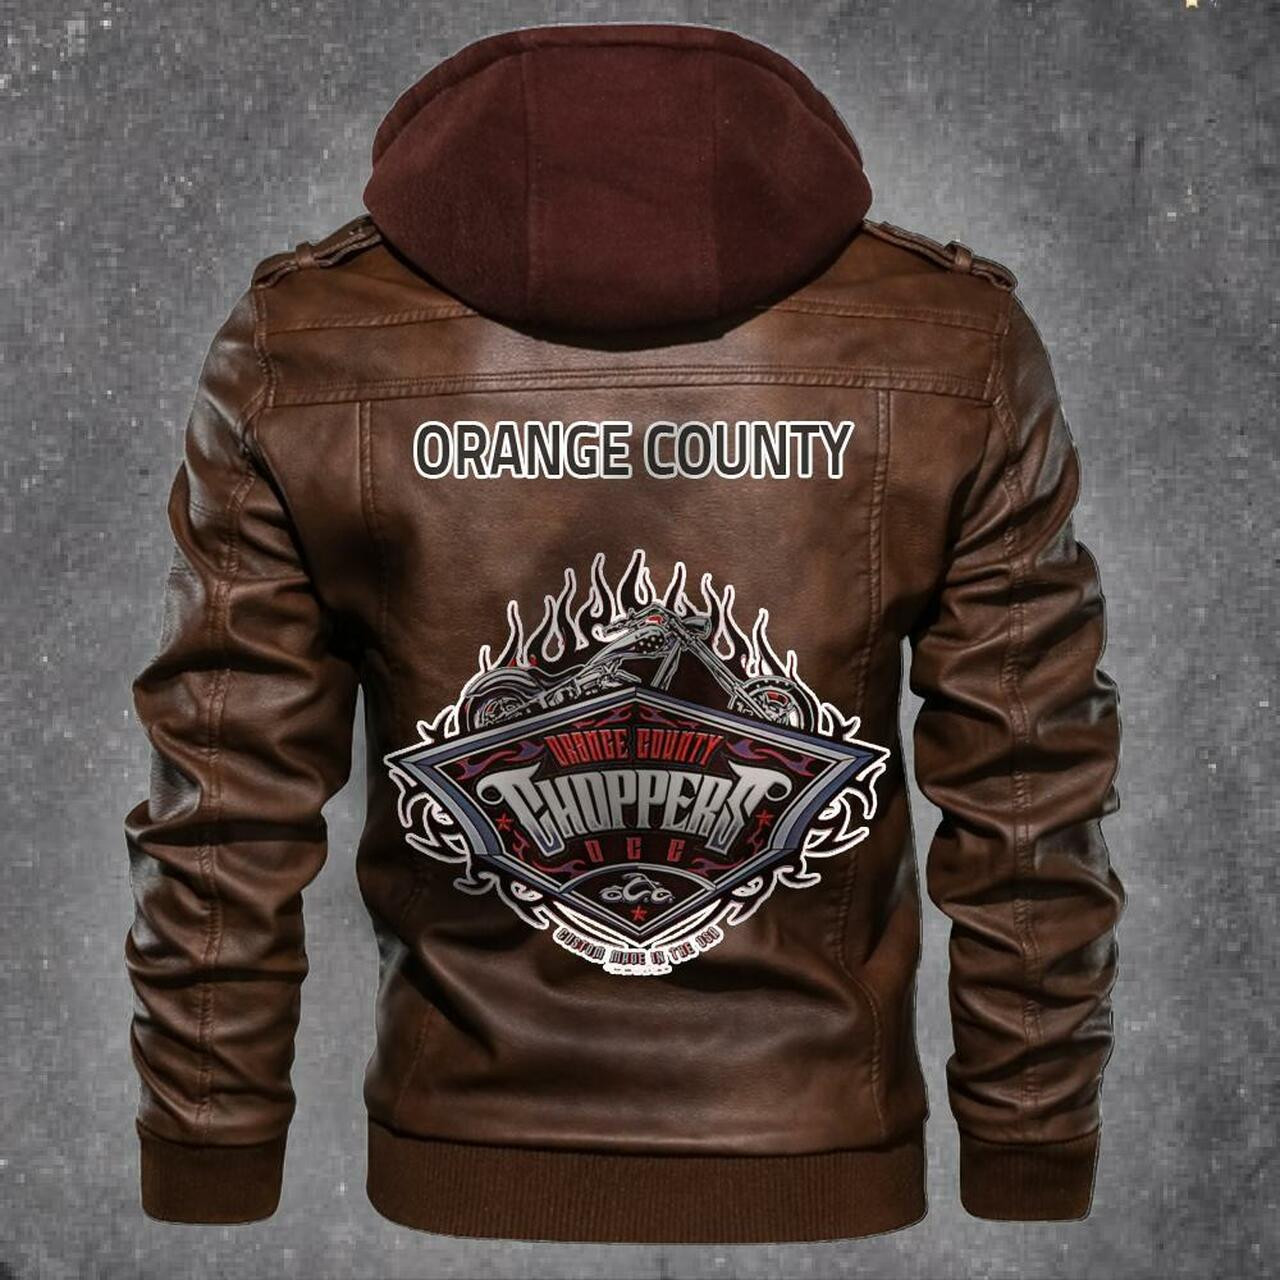 Top leather jacket Sells Best on Techcomshop 169